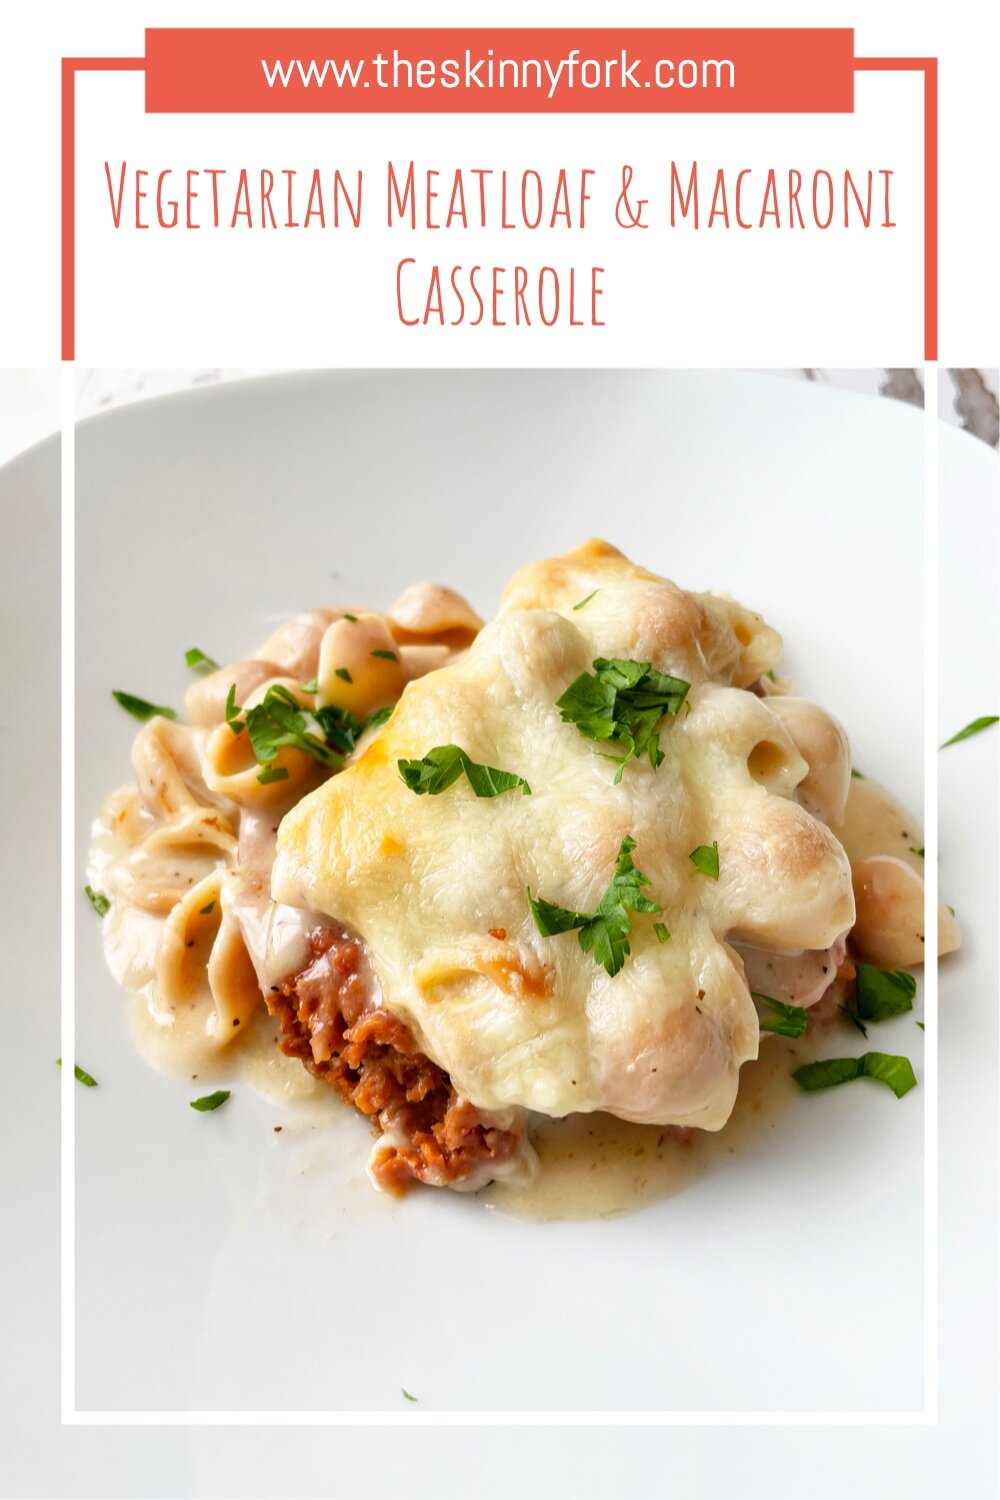 Vegetarian-Meatloaf-&-Macaroni-Casserole 1.jpg